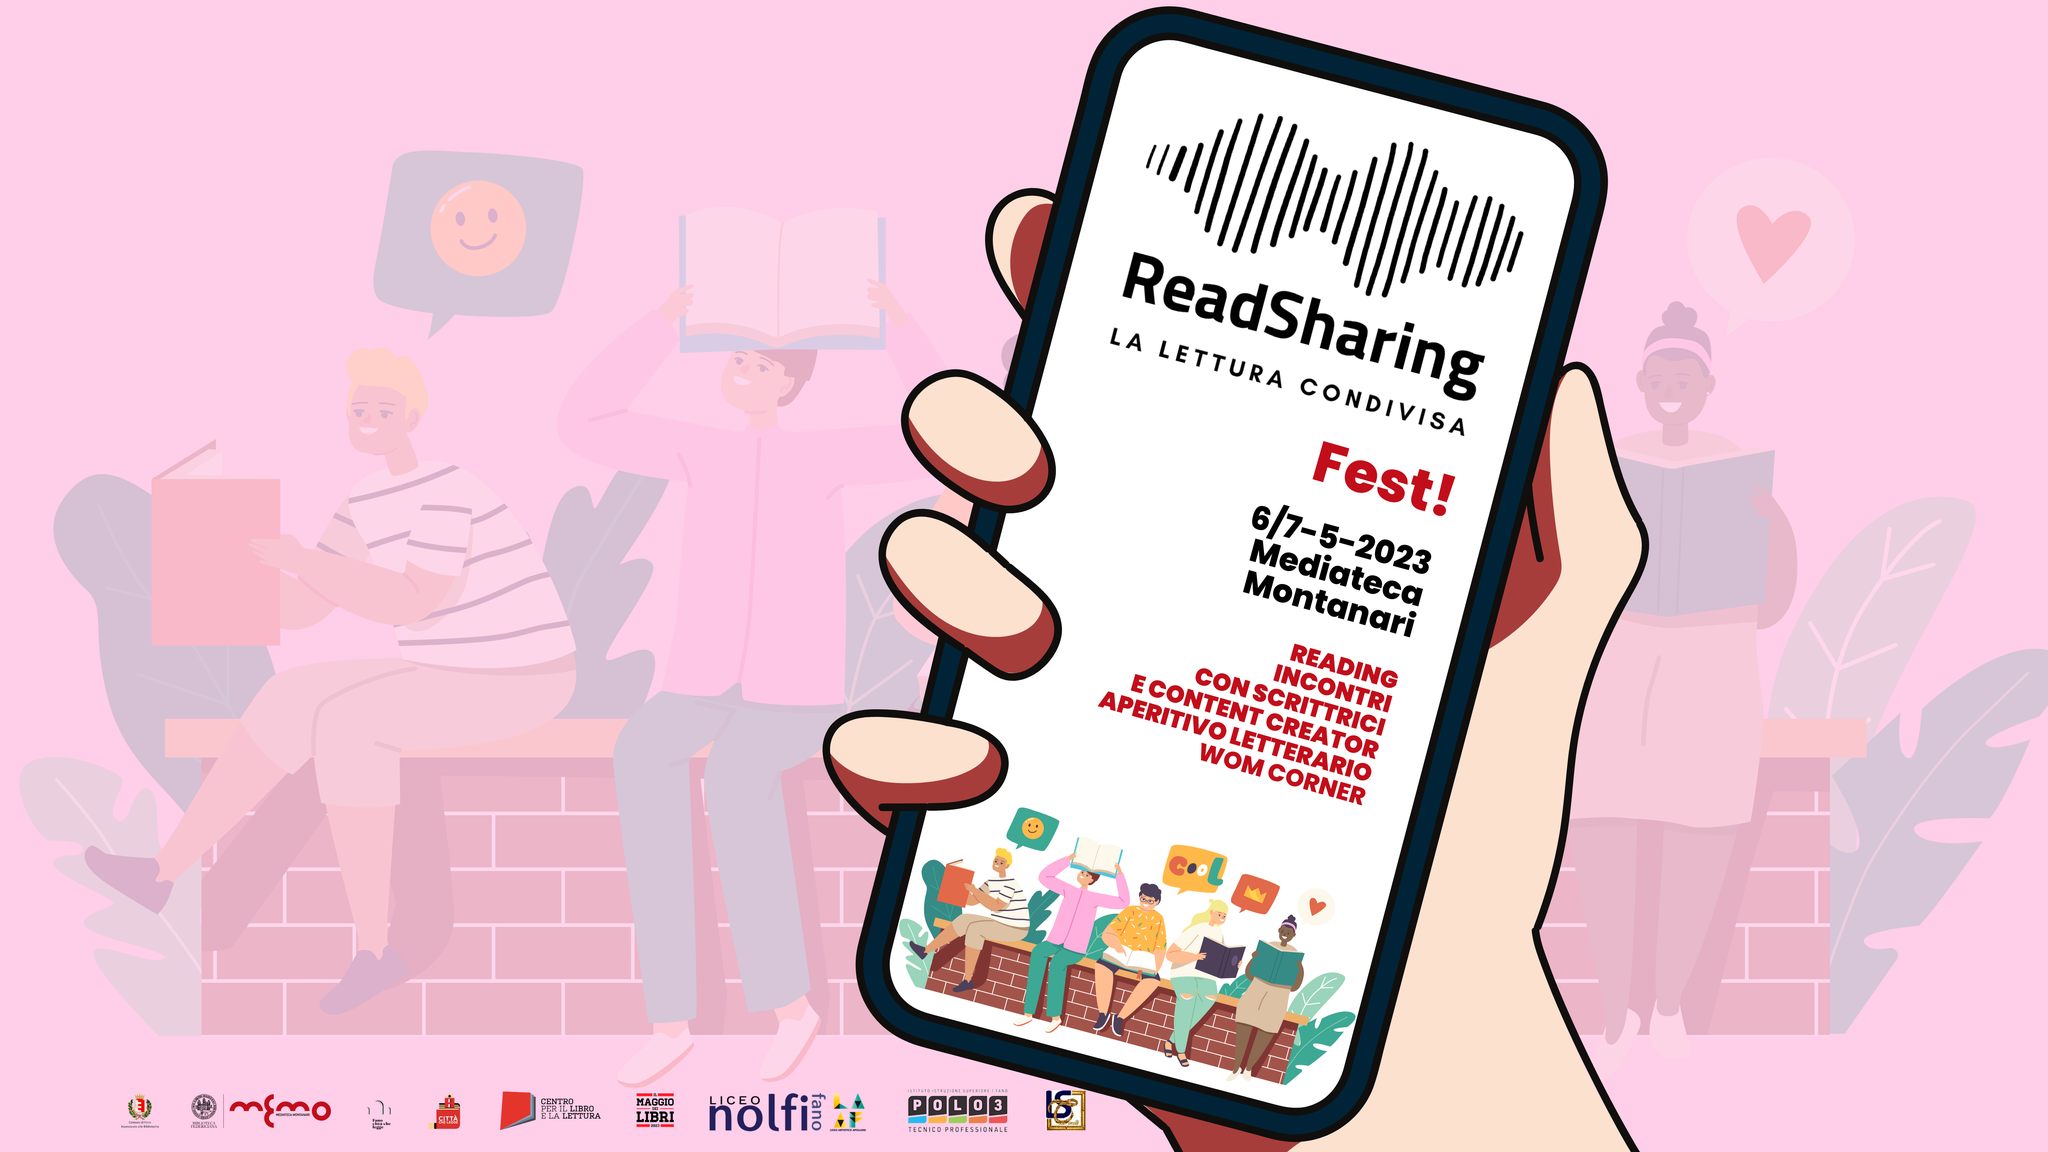 ReadSharing Fest!